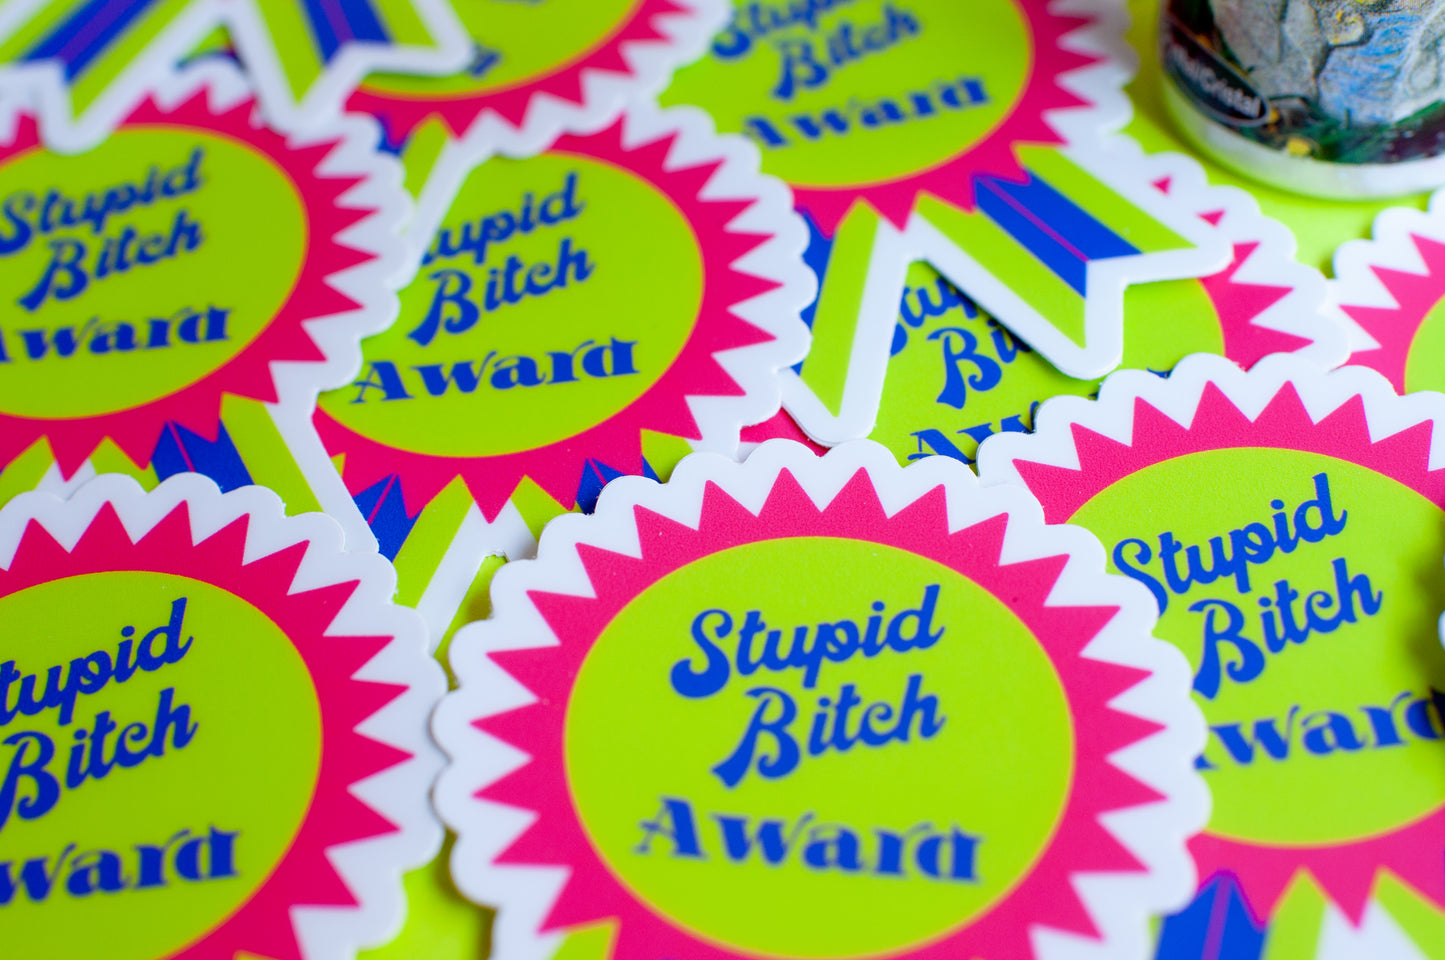 Stupid Bitch Award